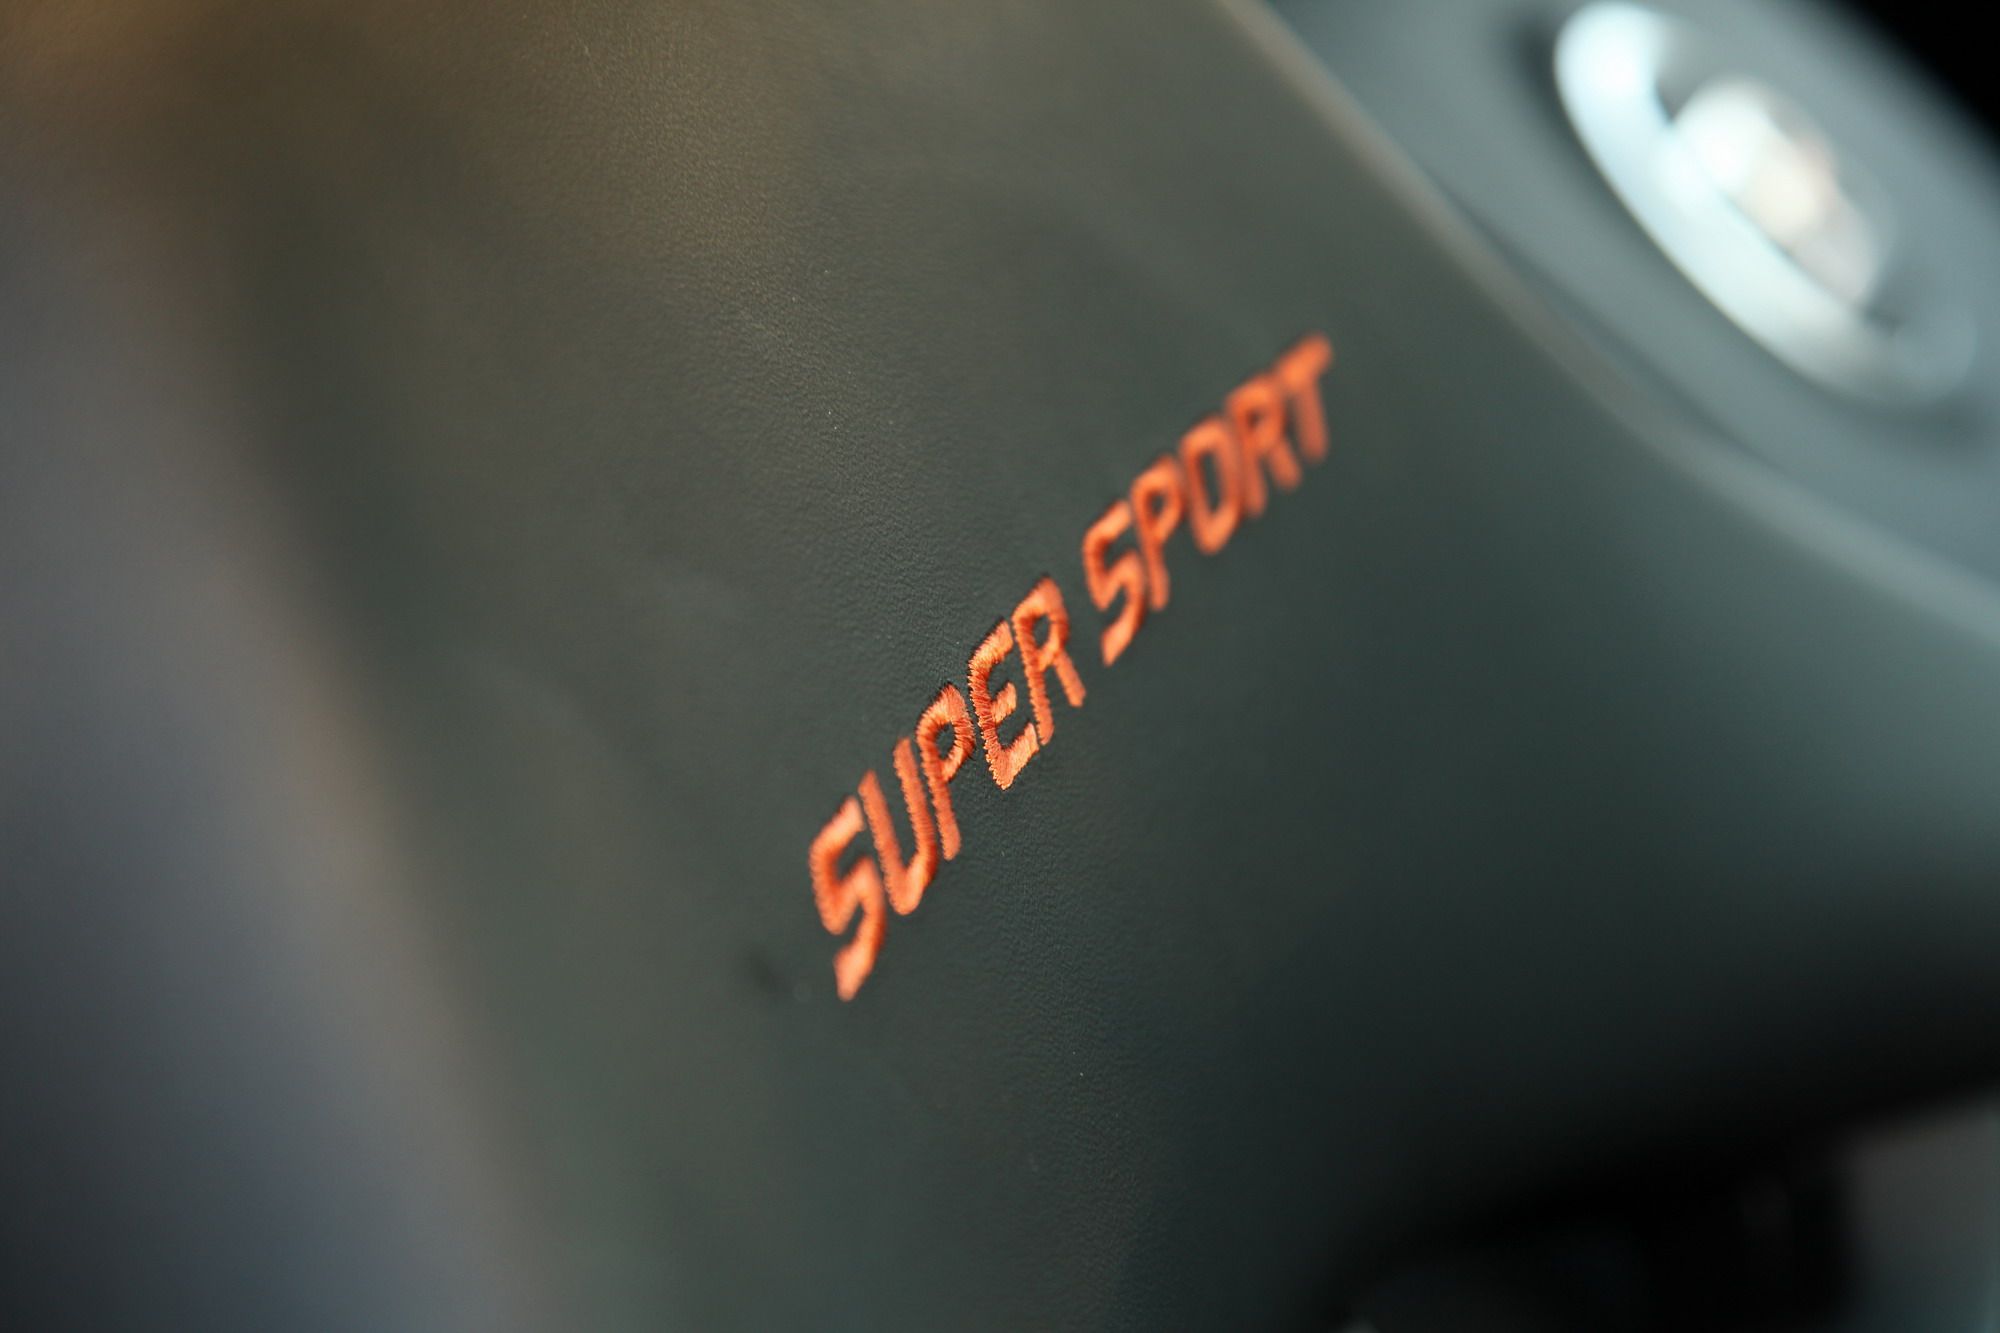 2011 Bugatti Veyron 16.4 Super Sport